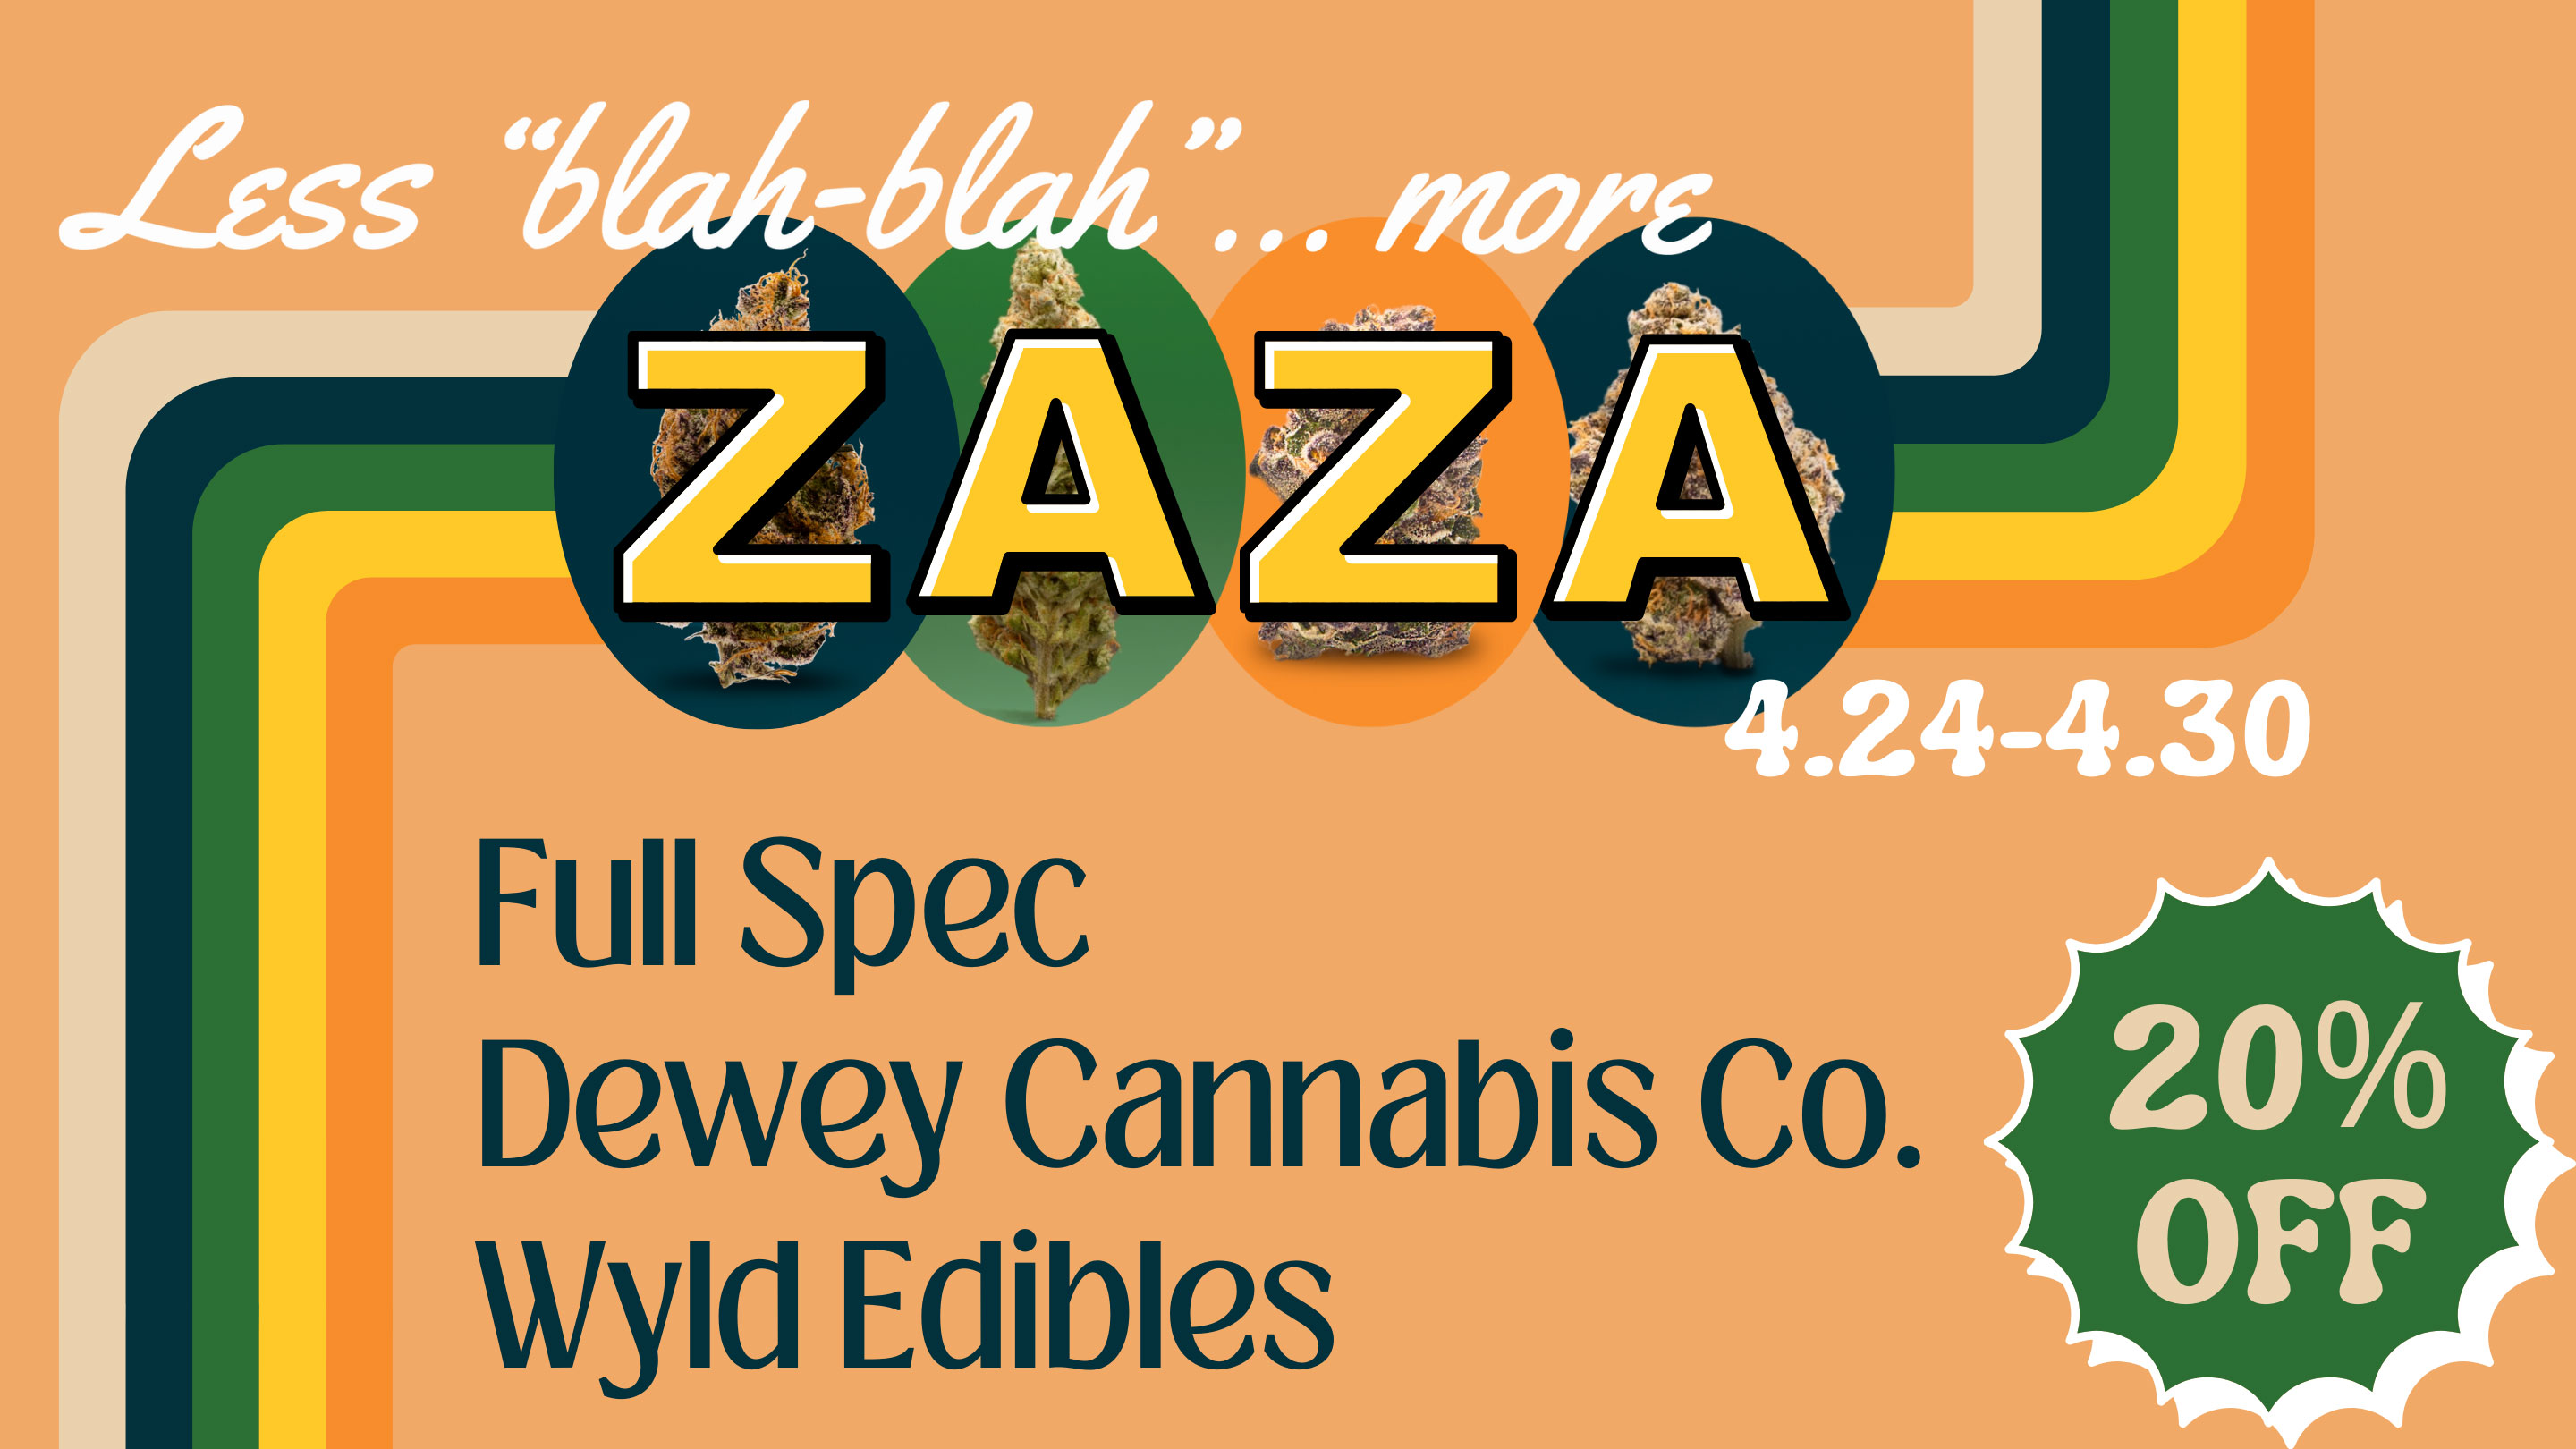 Less blah-blah, more zaza! Take 20% off Full spec, Dewey Cannabis Co, and Wyld edibles 4/24-4/30